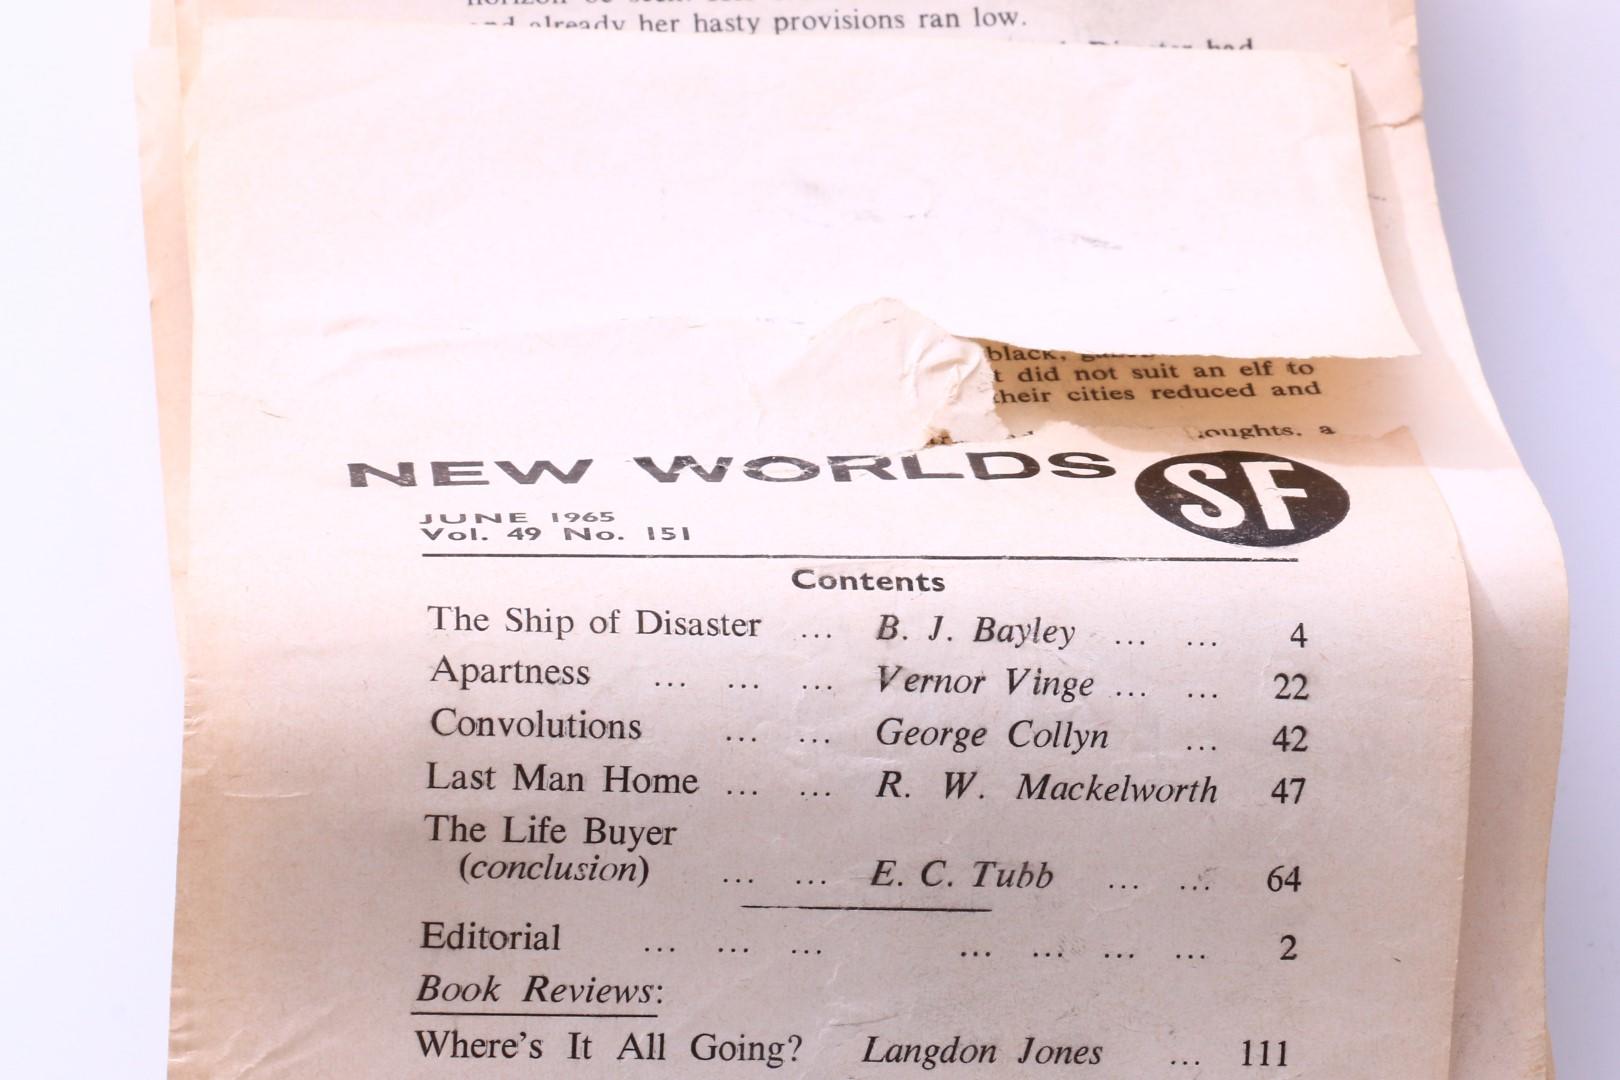 Michael Moorcock [ed.] - New Worlds: June 1965 (volume 49, No. 151) - , 1965, Proof.